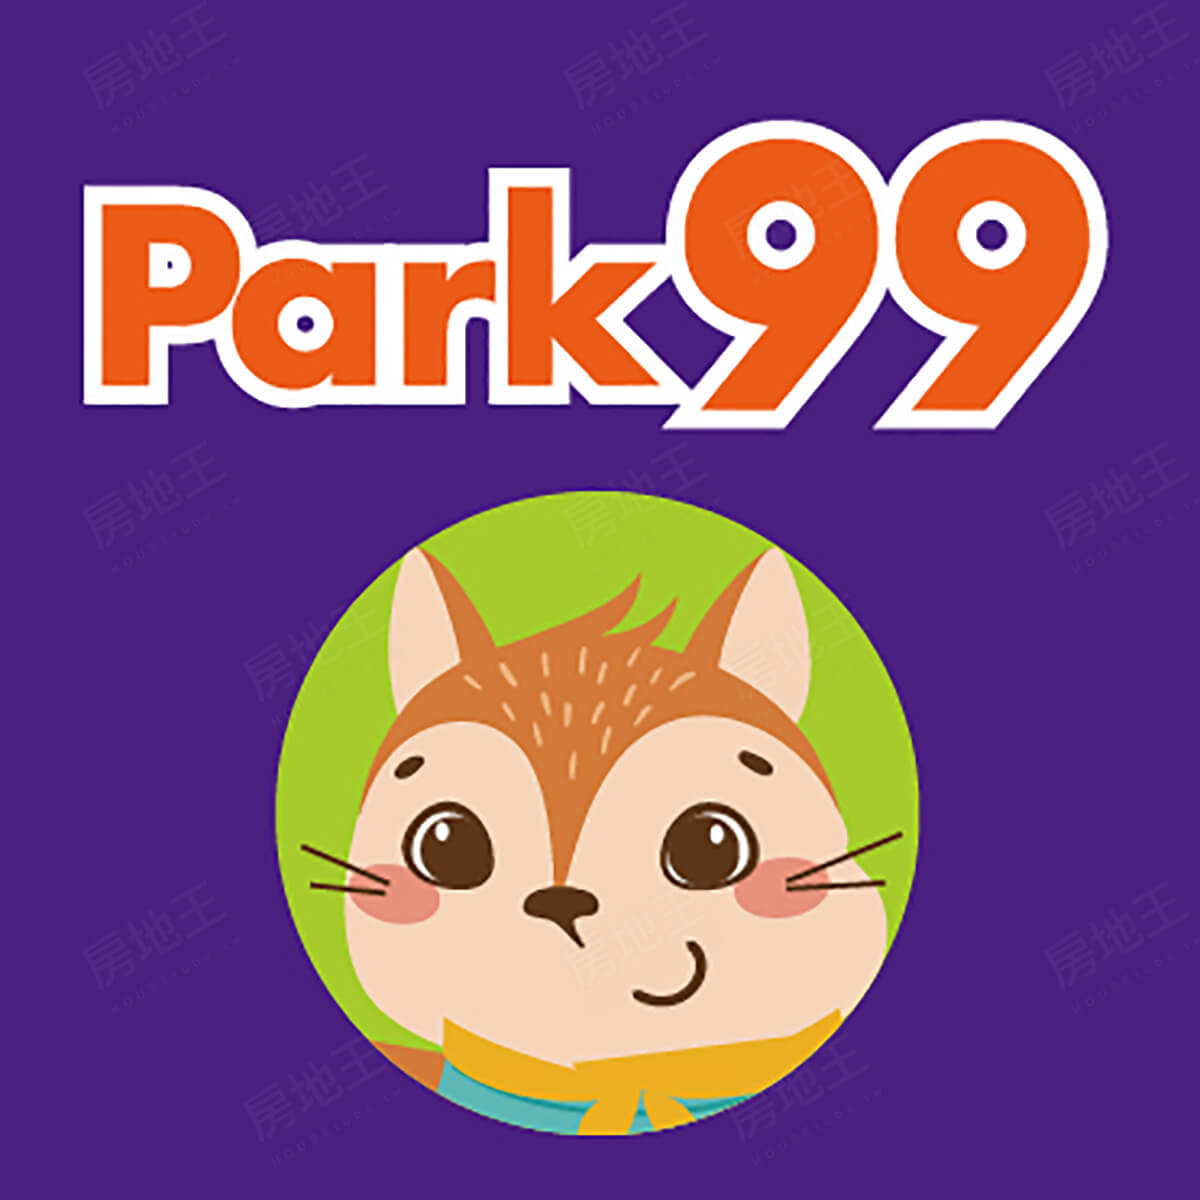 Park99